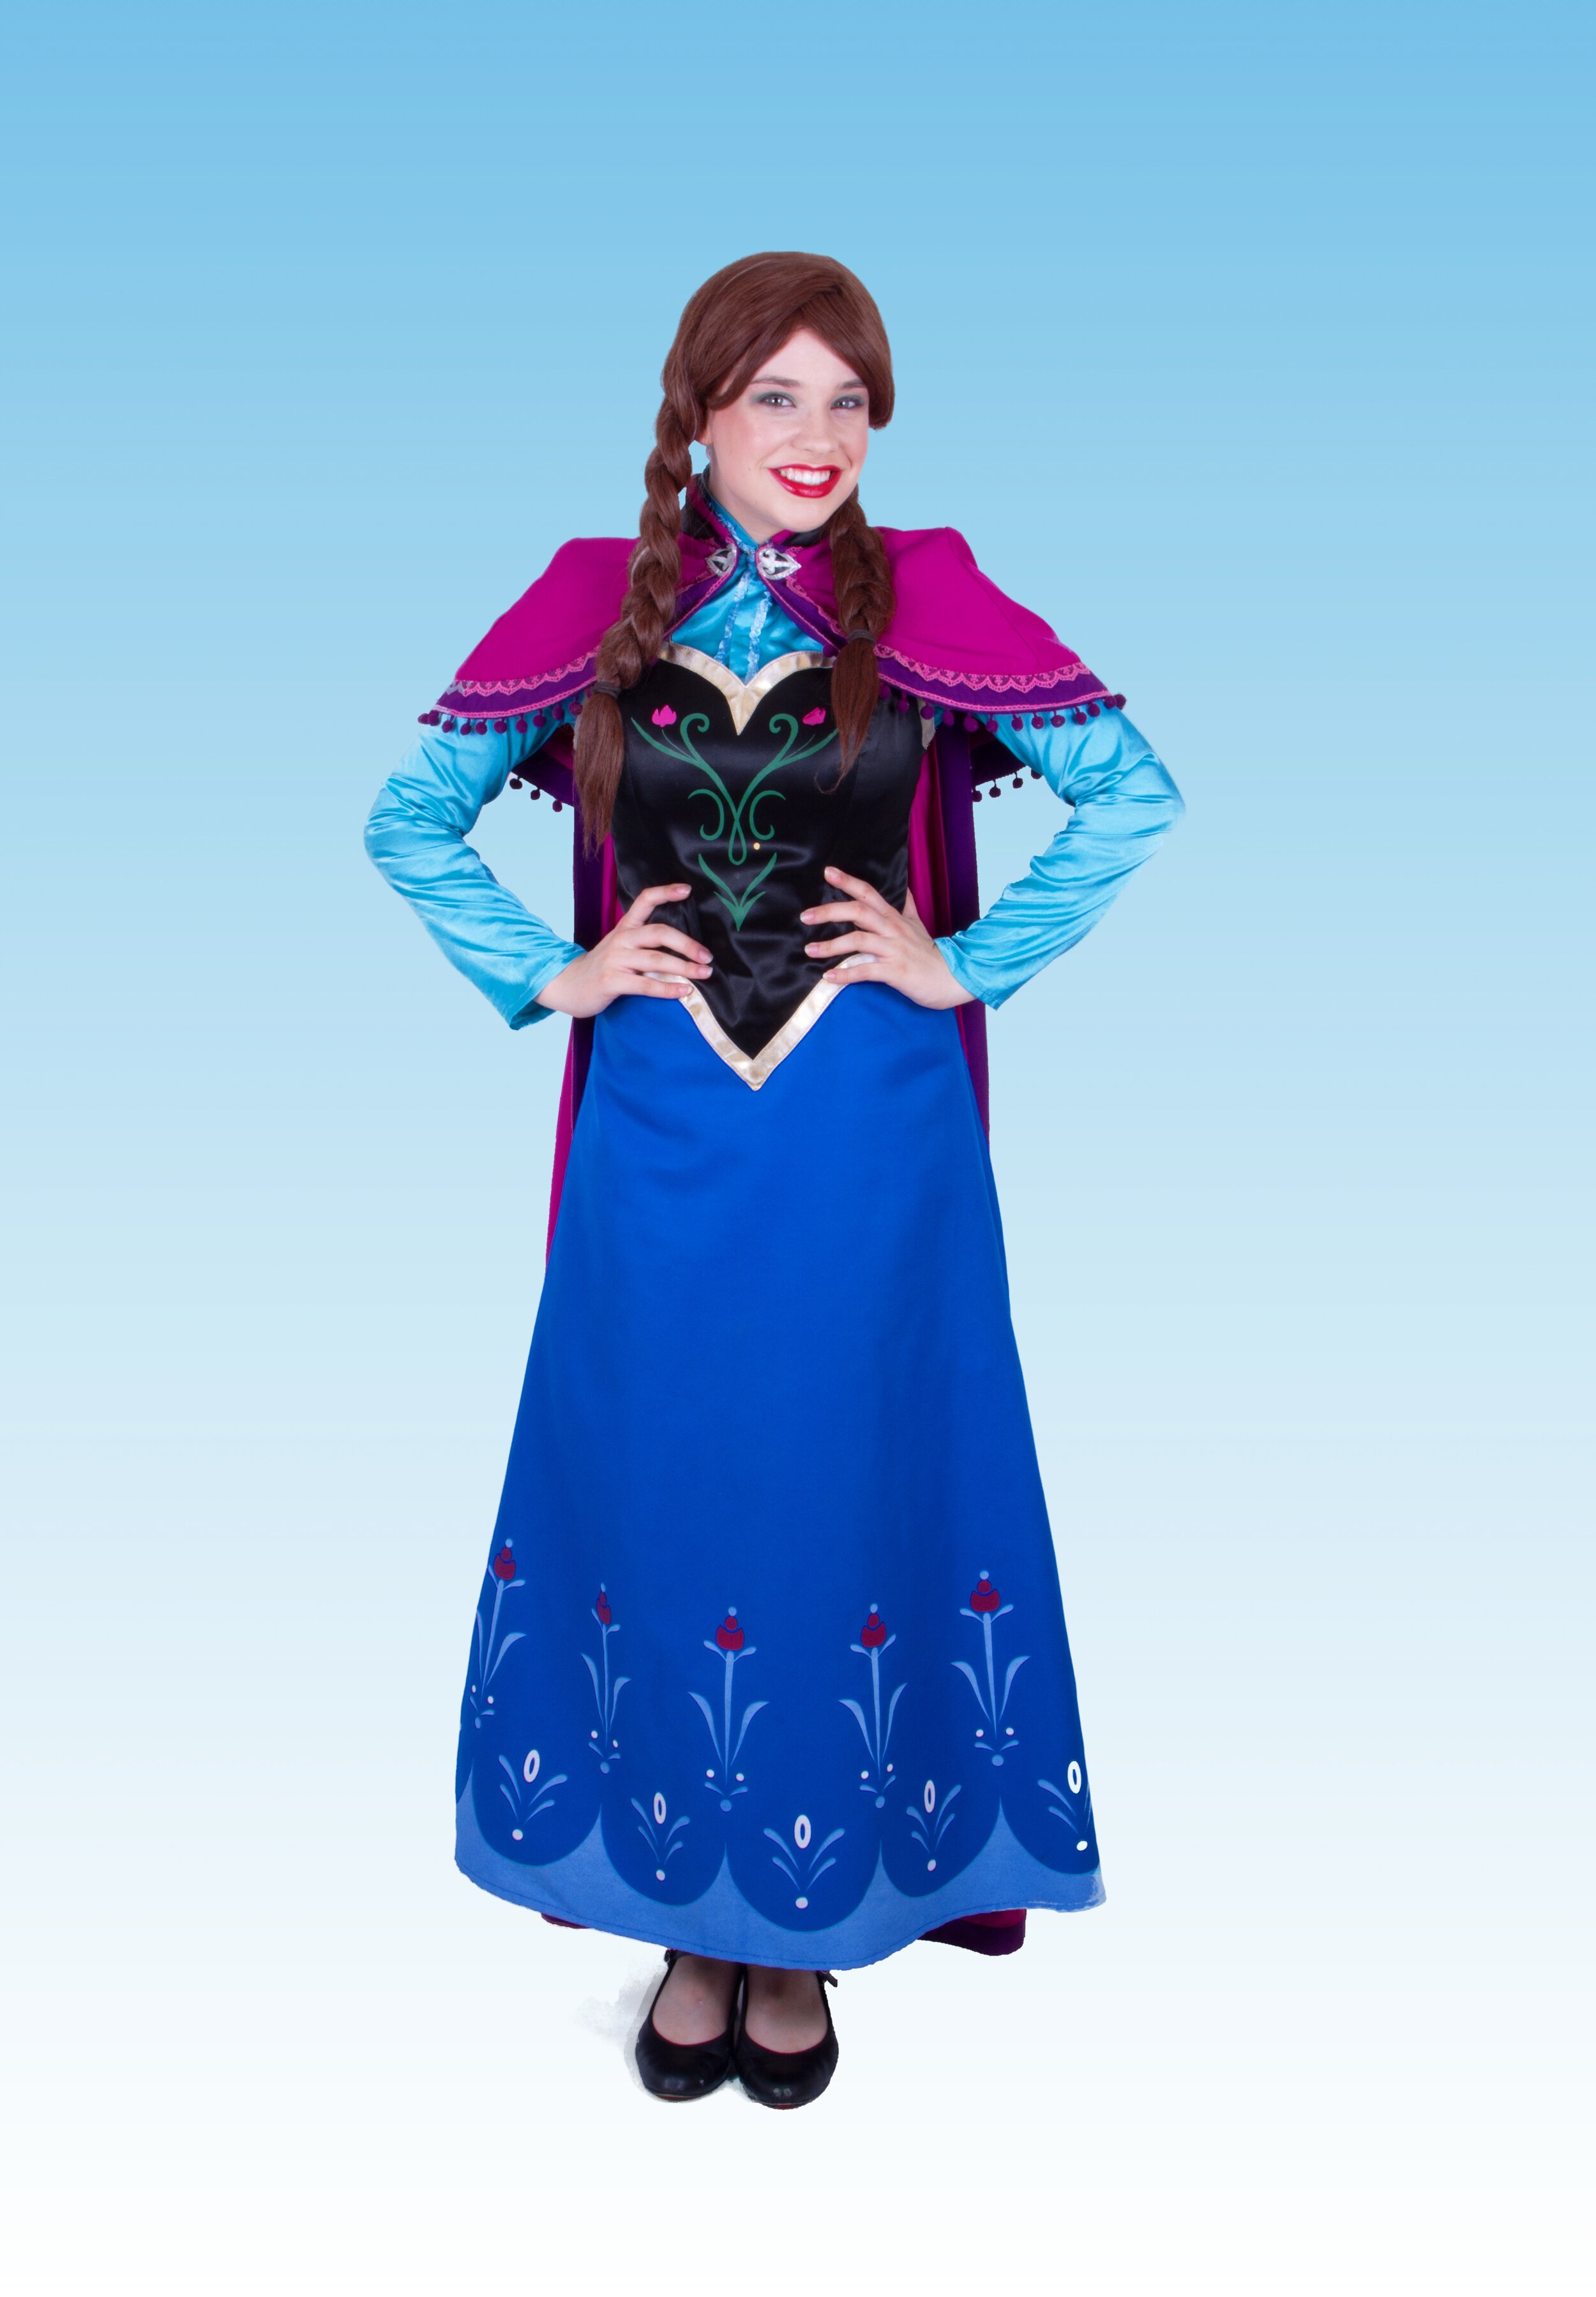 Frozen Anna disney princess performer at event